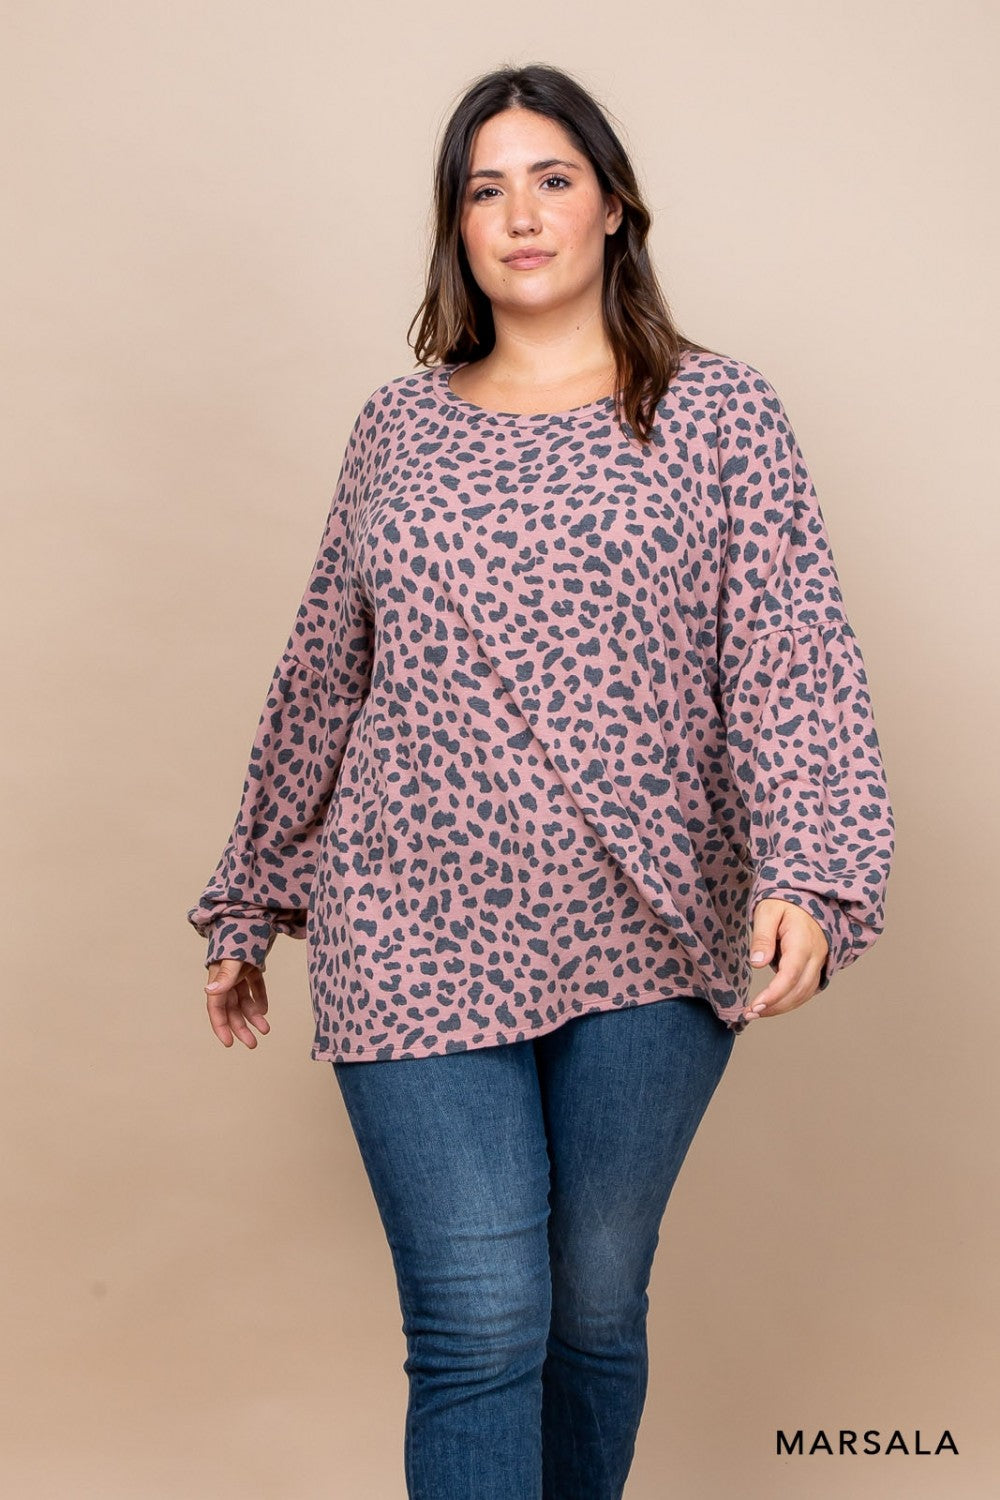 Marsala Cheetah Shirt